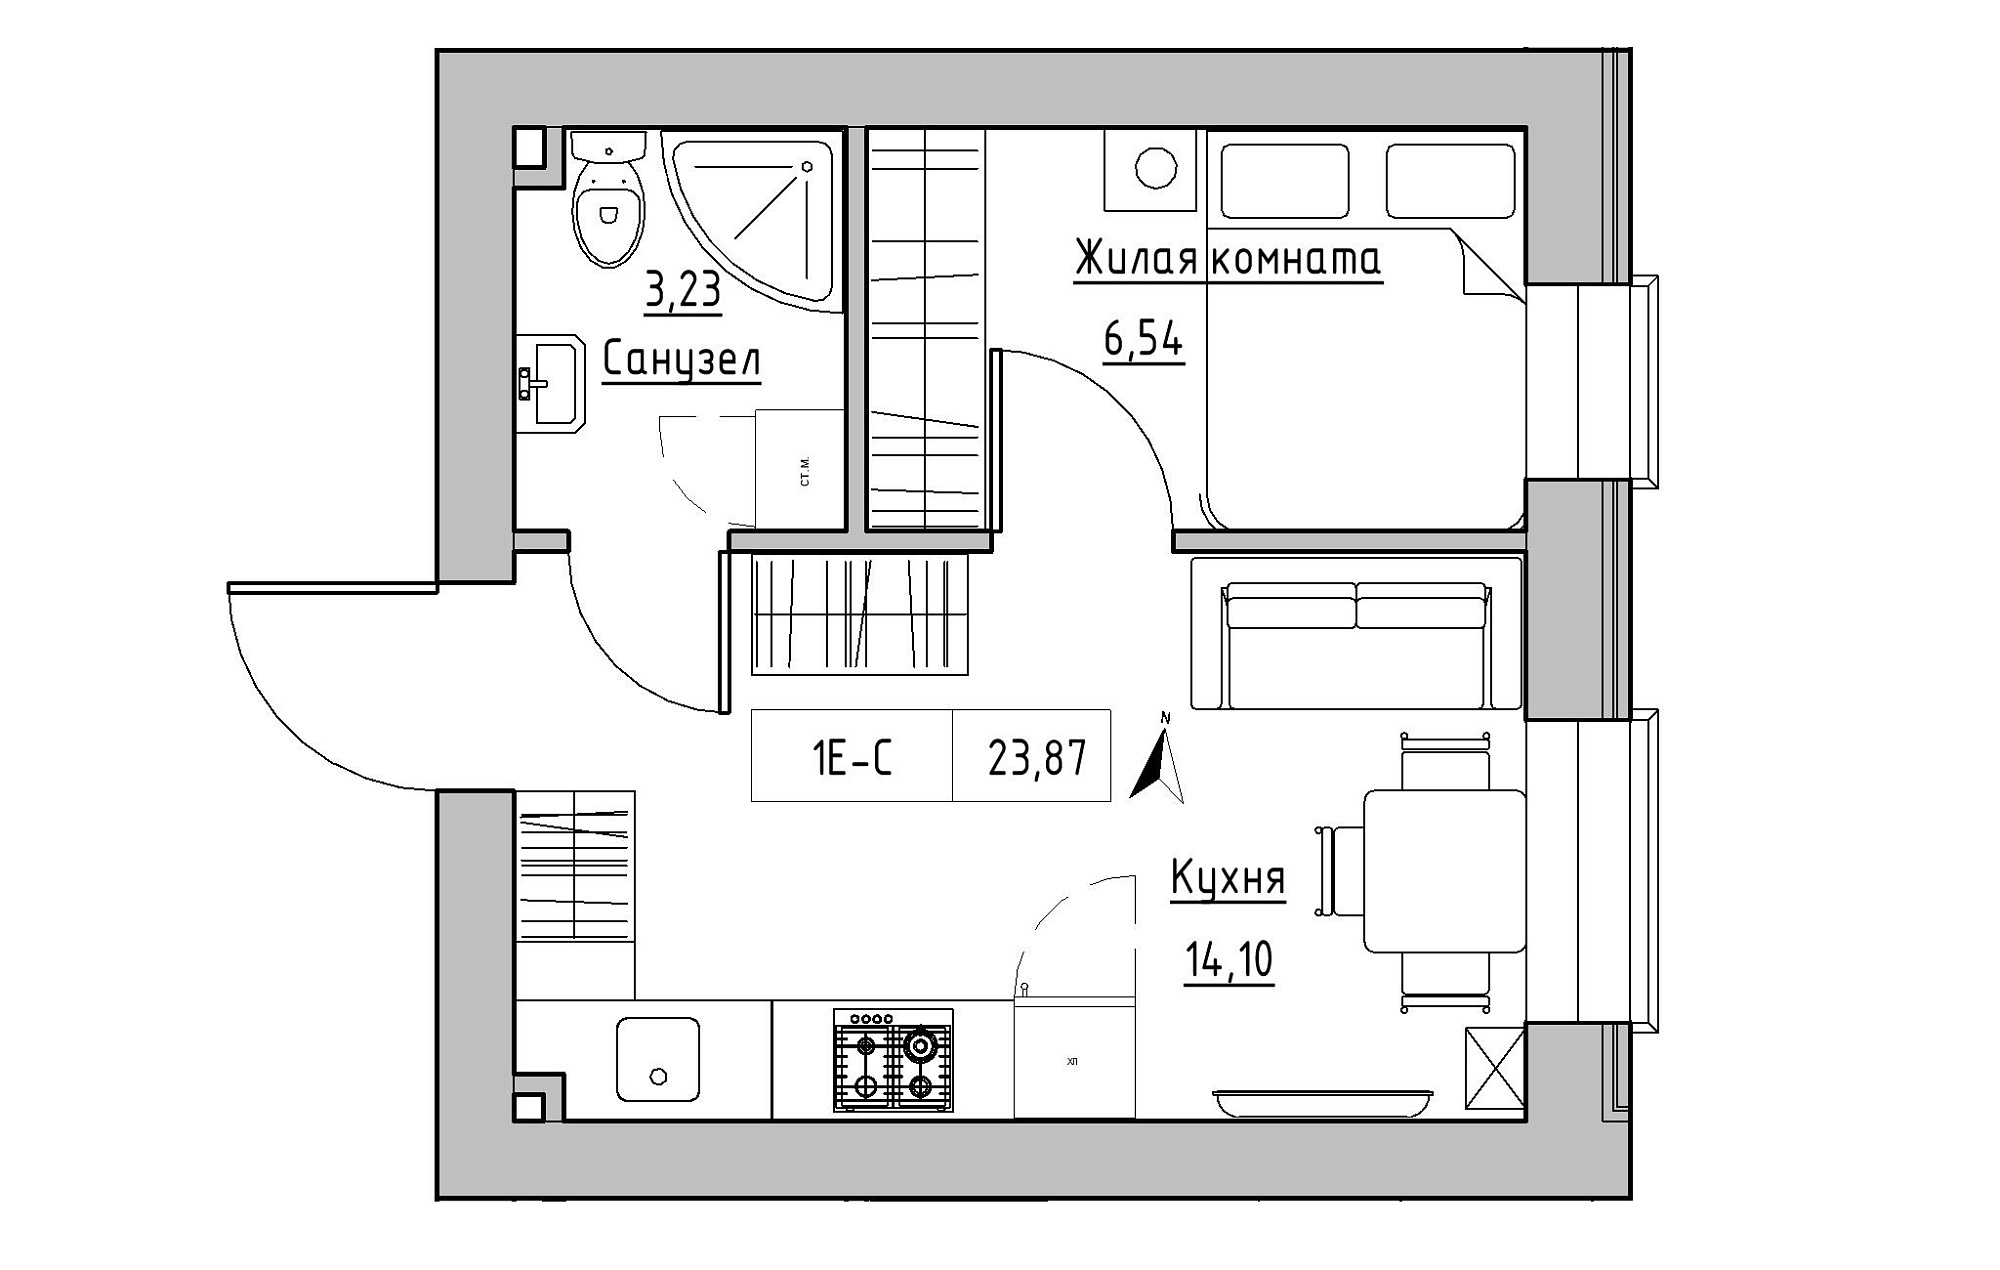 Planning 1-rm flats area 23.87m2, KS-019-01/0004.